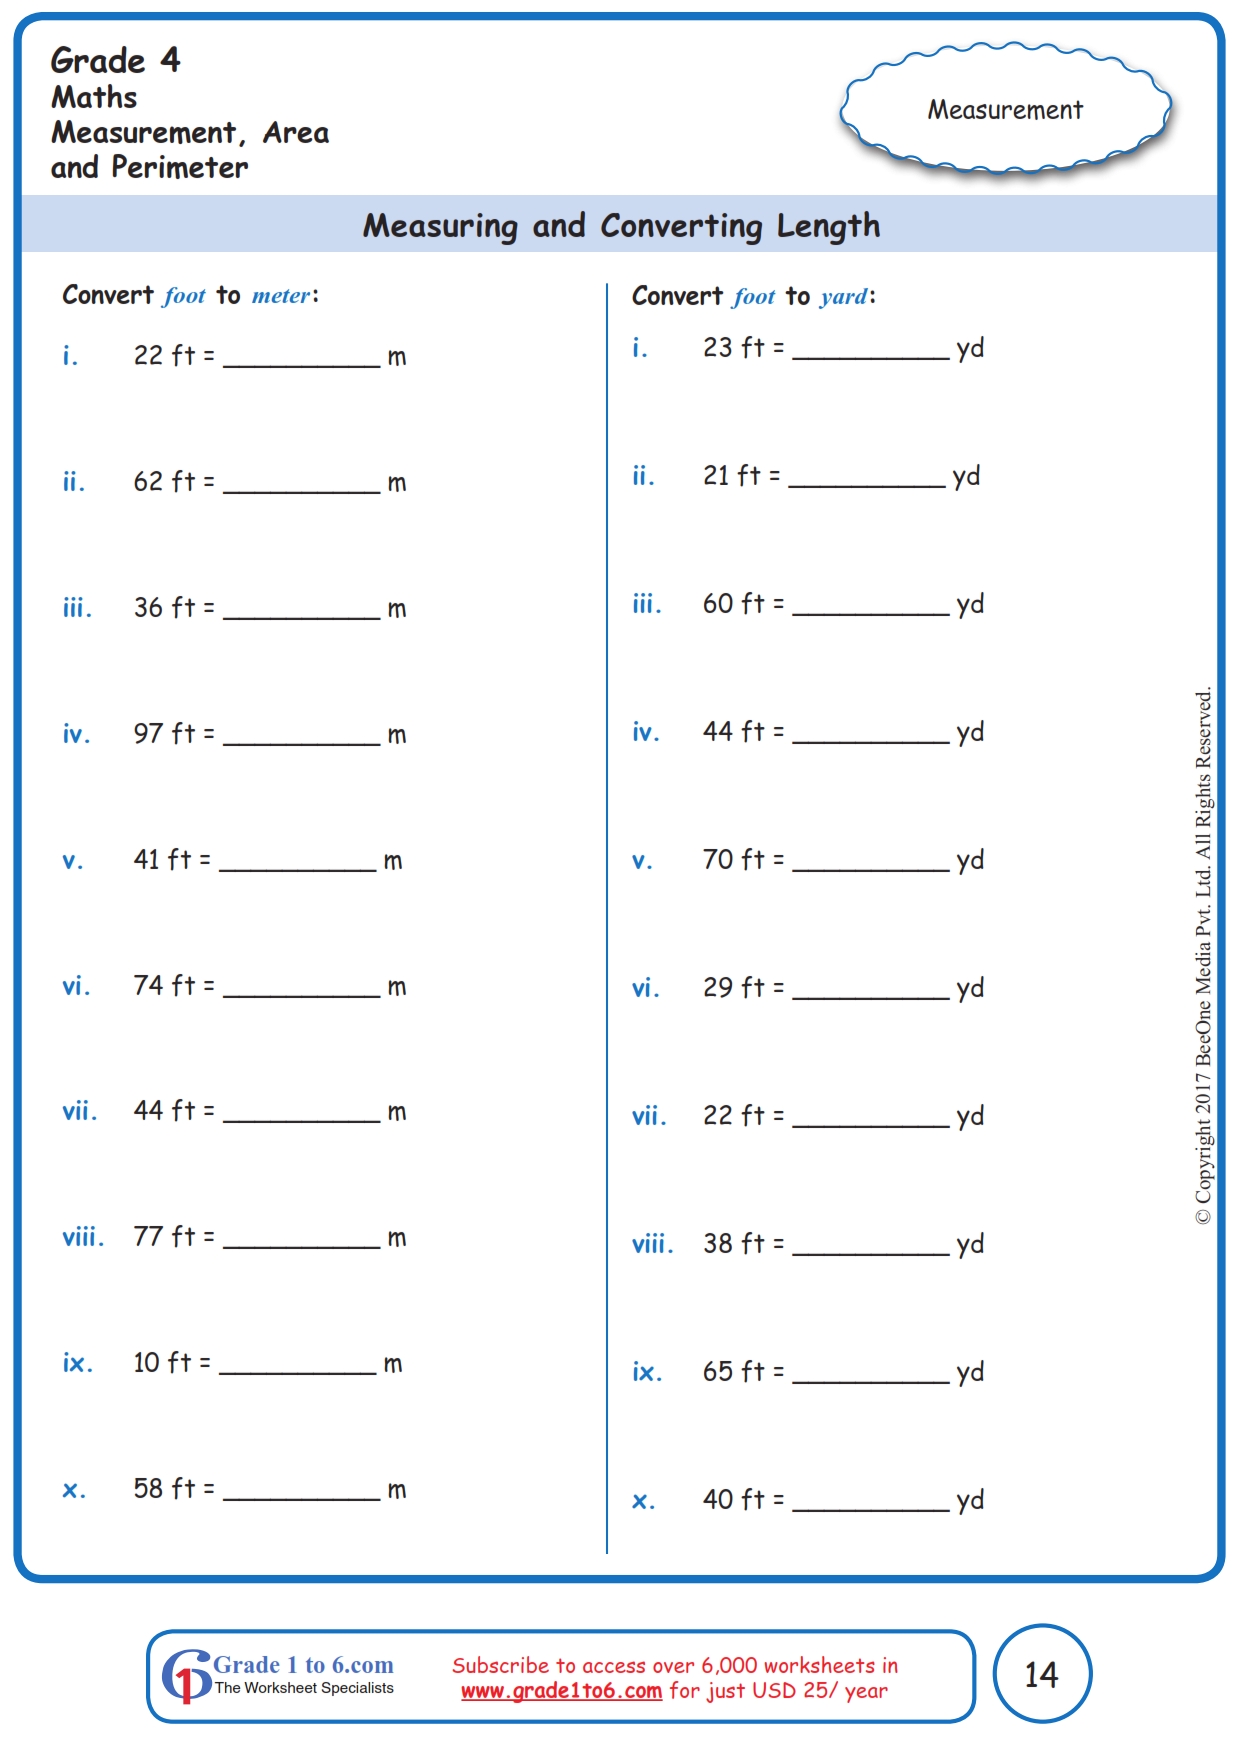 grade-4-measurement-worksheets-www-grade1to6